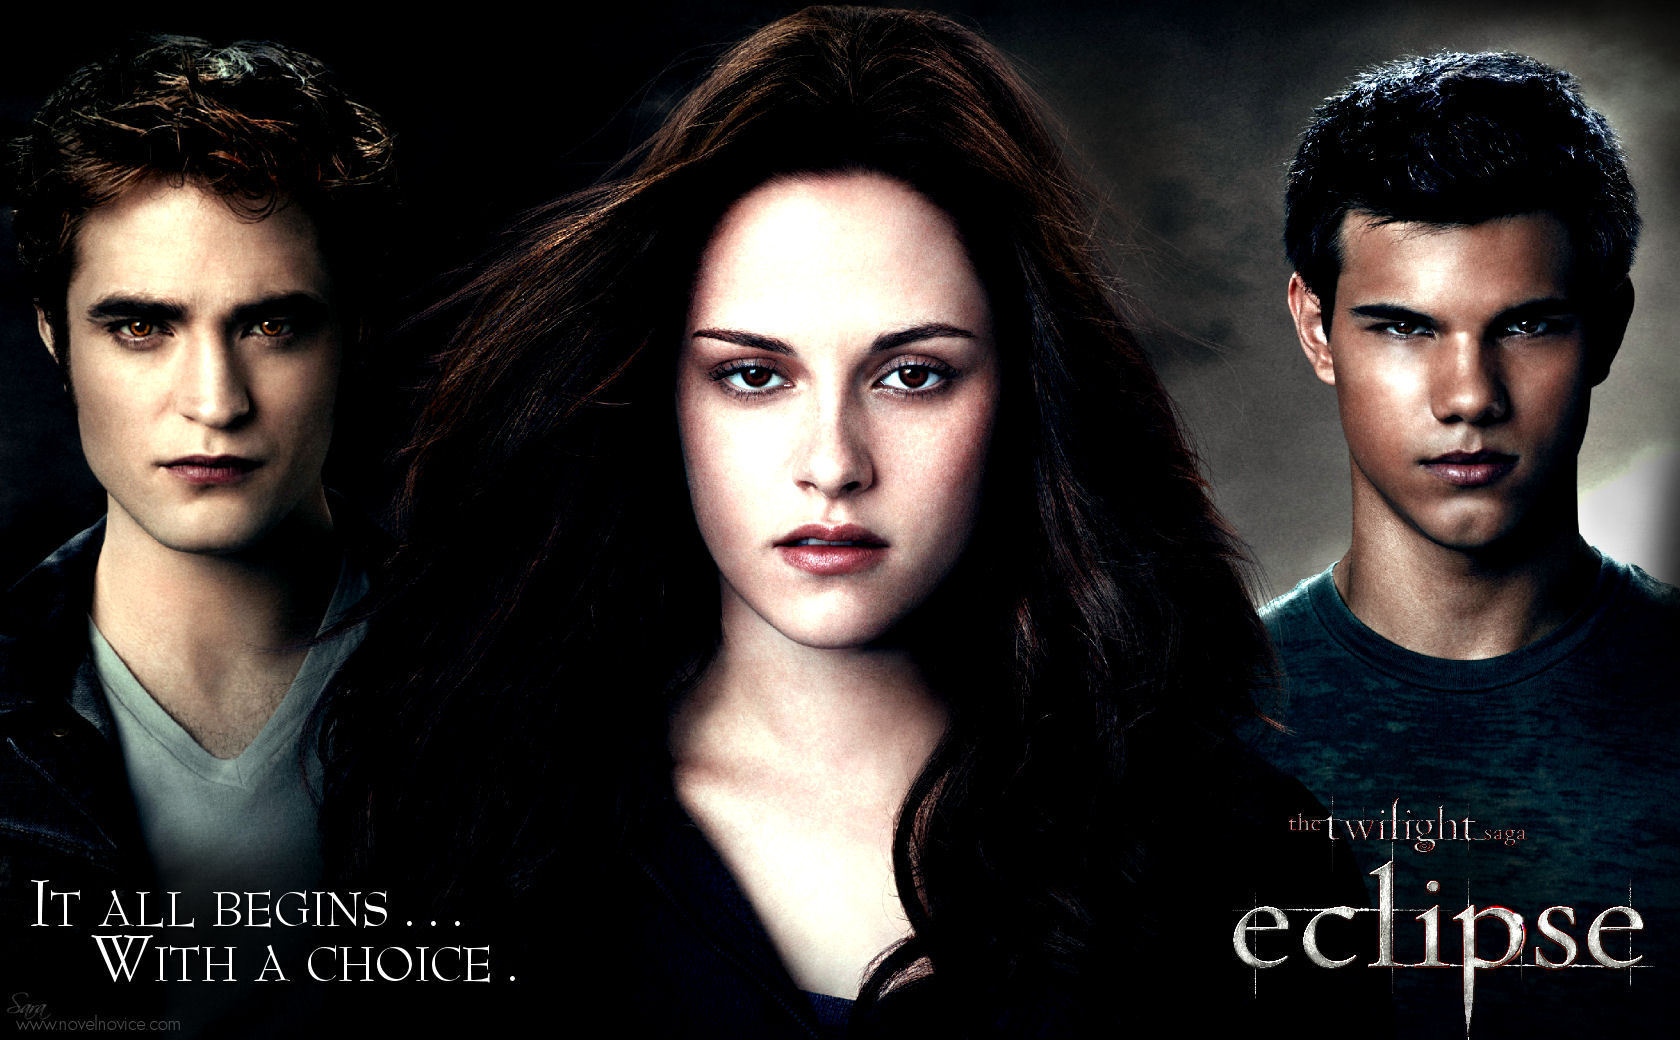 The Twilight Saga Eclipse Wallpaper Photos Pictures Celebrities